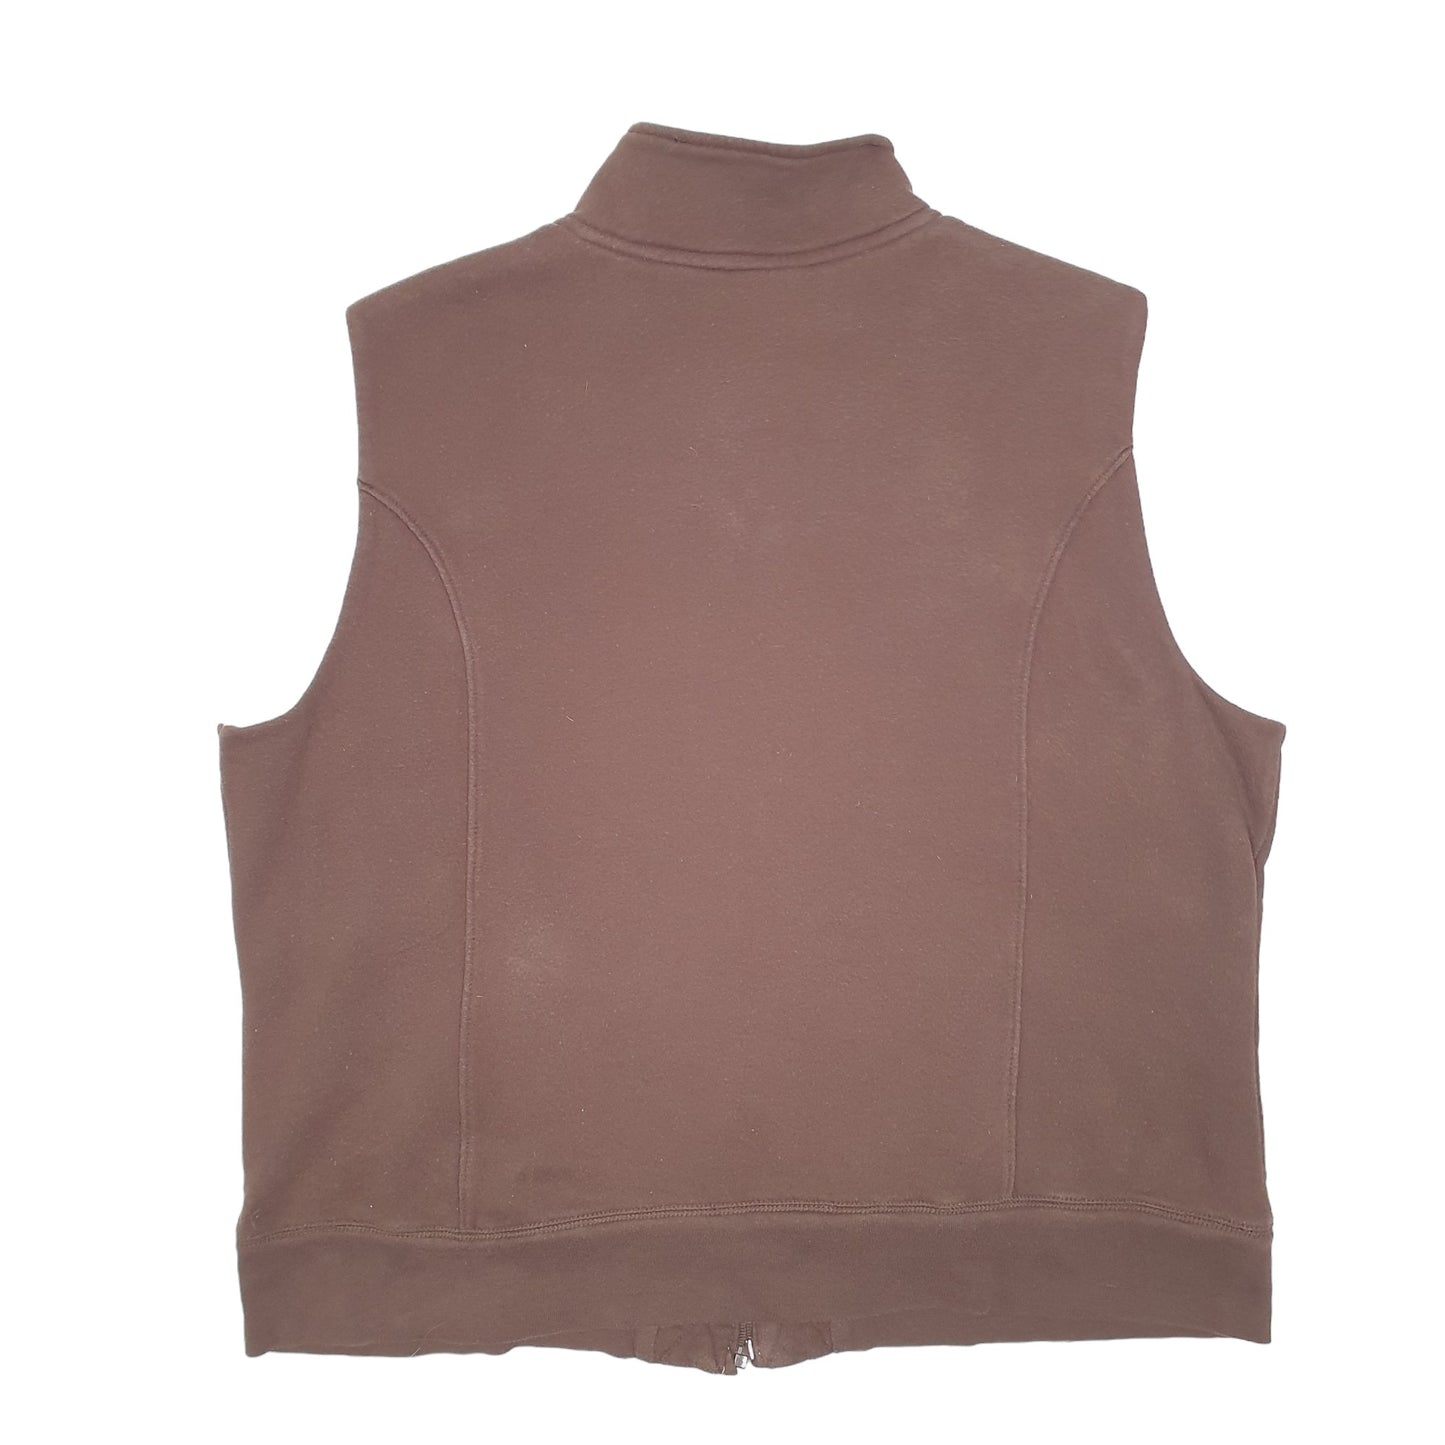 Womens Brown Basic Additions Fleece Vest Walking Hiking Outdoors Crewneck Coat